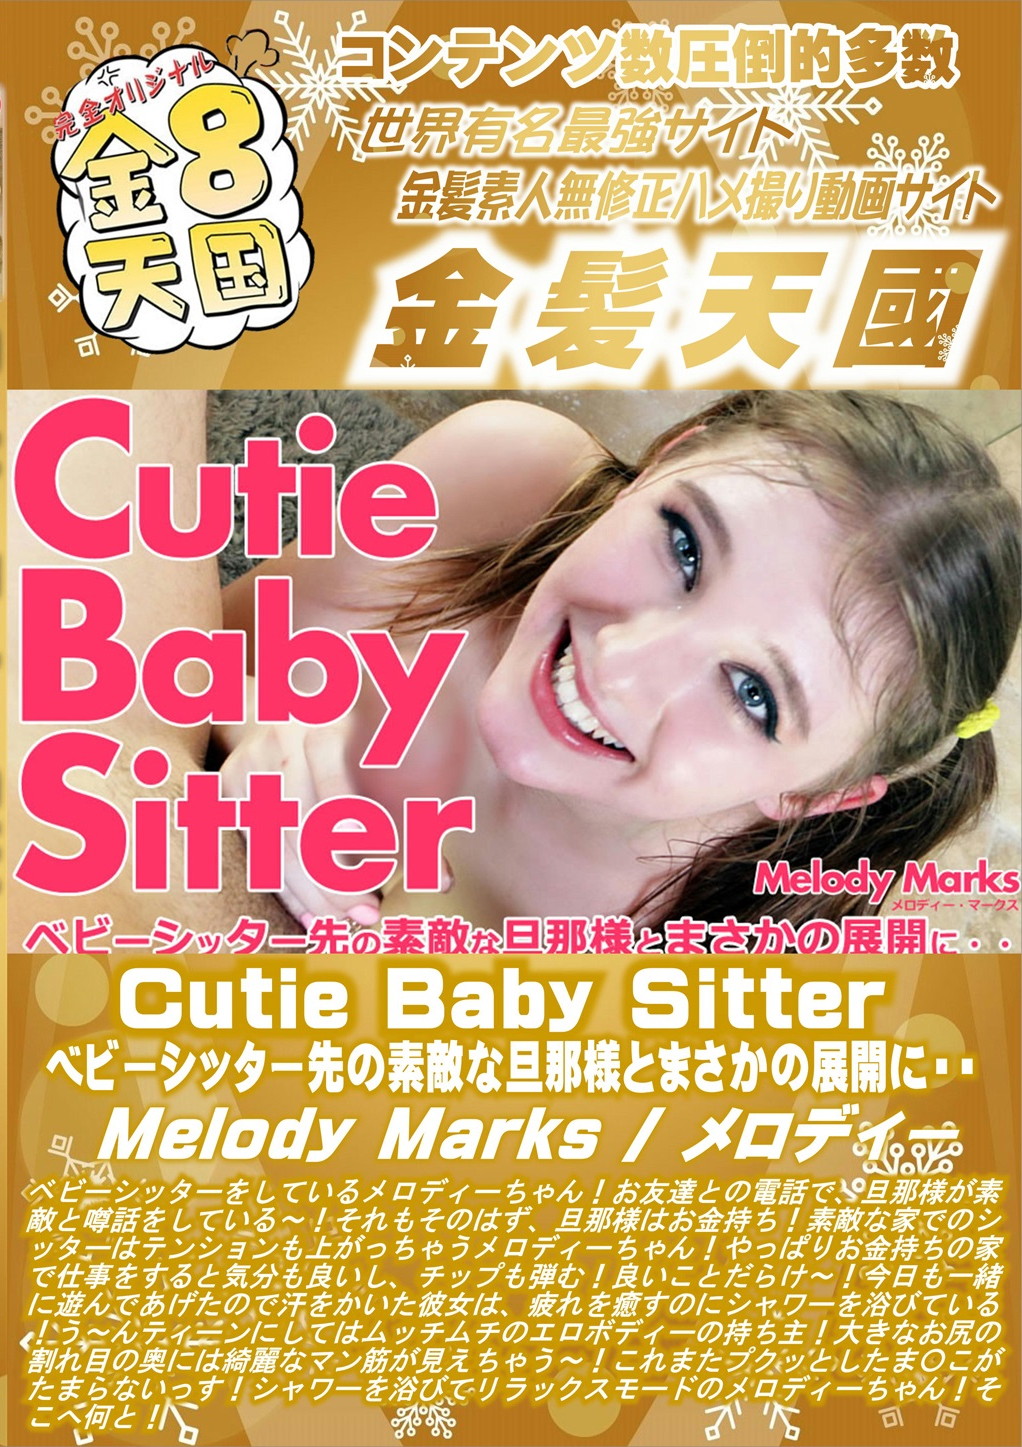 Cutie Baby Sitter ベビーシッター先の素敵な旦那様とまさかの展開に・・・Melody Marks メロディー